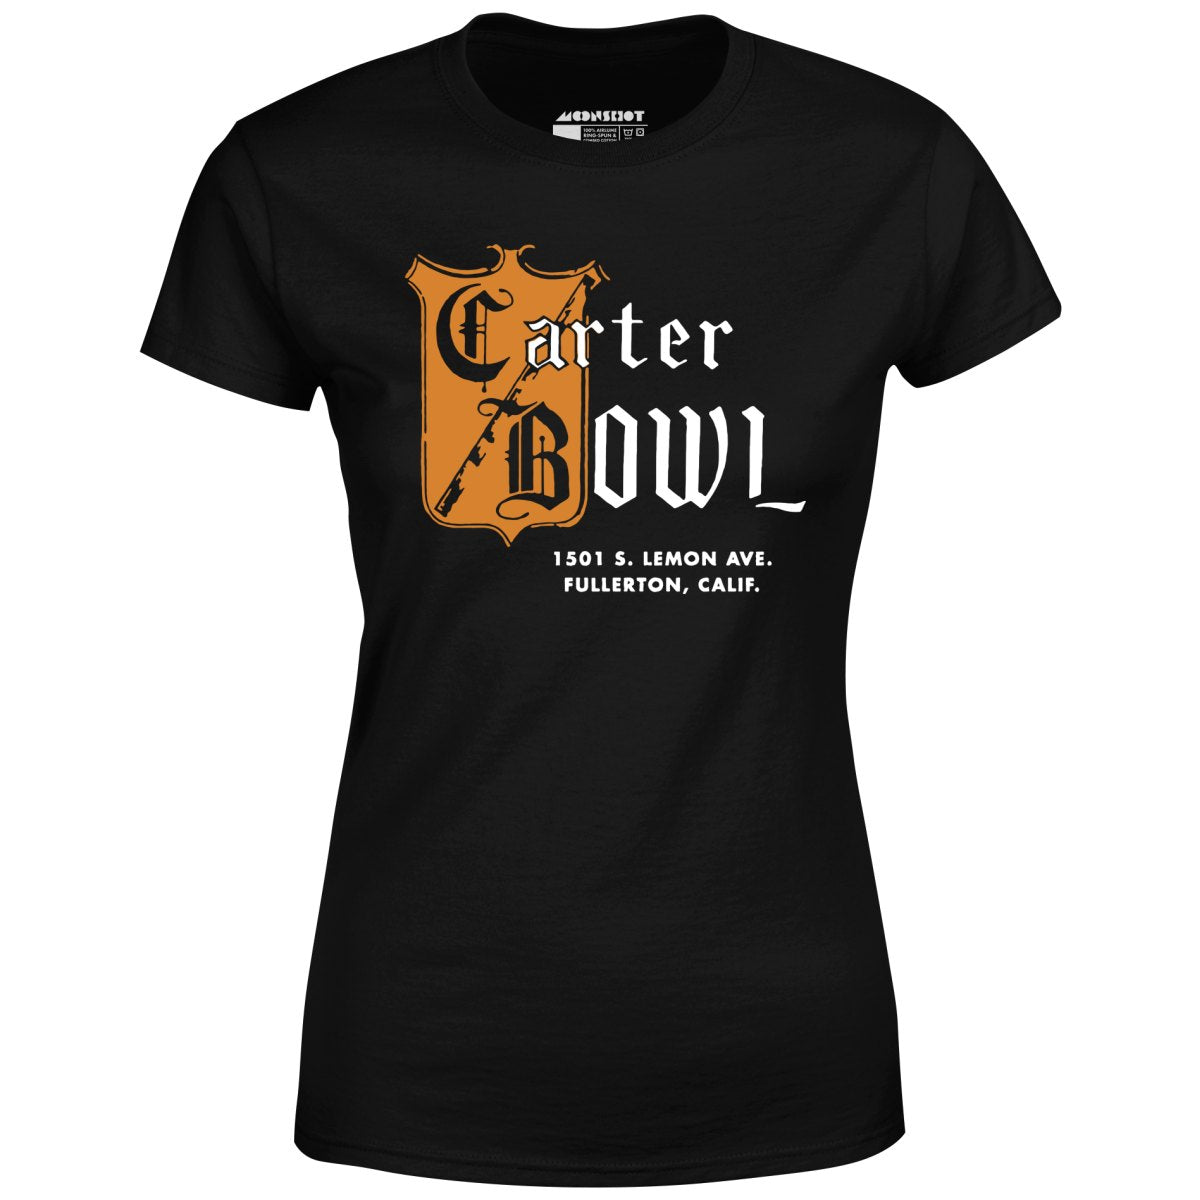 Carter Bowl - Fullerton, CA - Vintage Bowling Alley - Women's T-Shirt